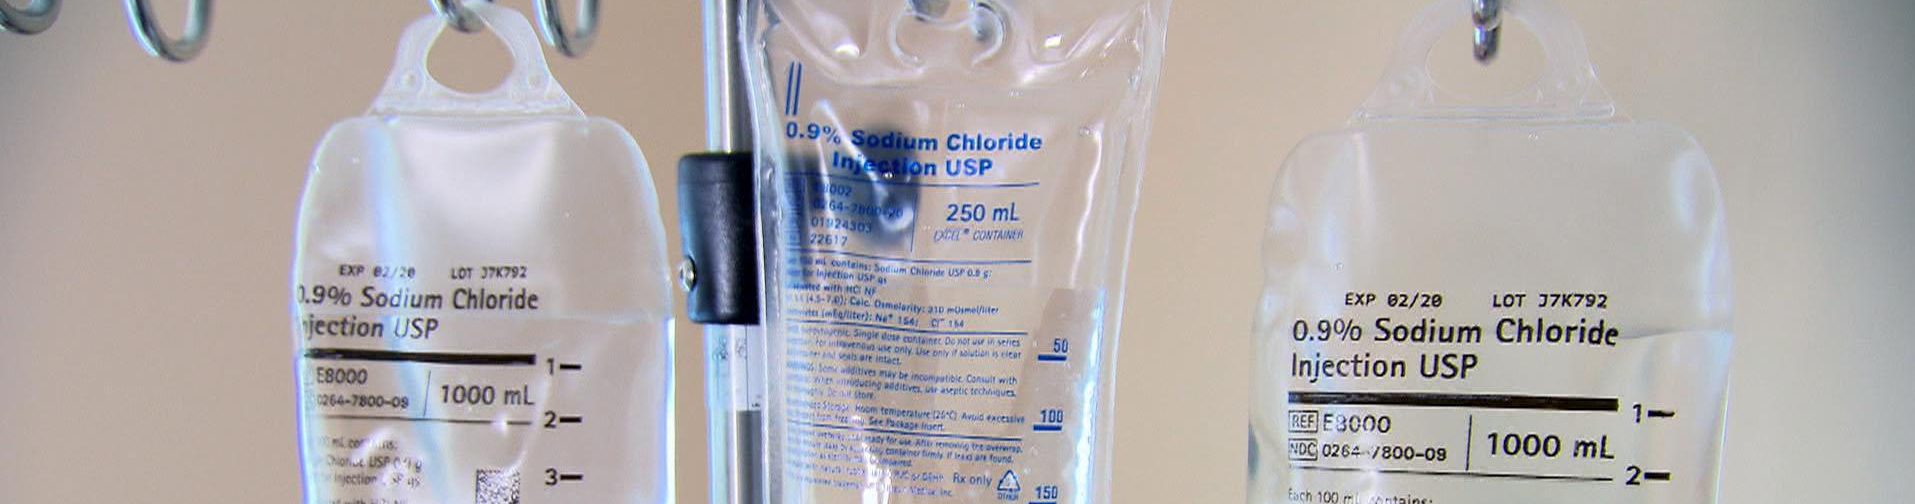 Sodium Chloride 09 1000 mL Bag 12case  Clinical 1